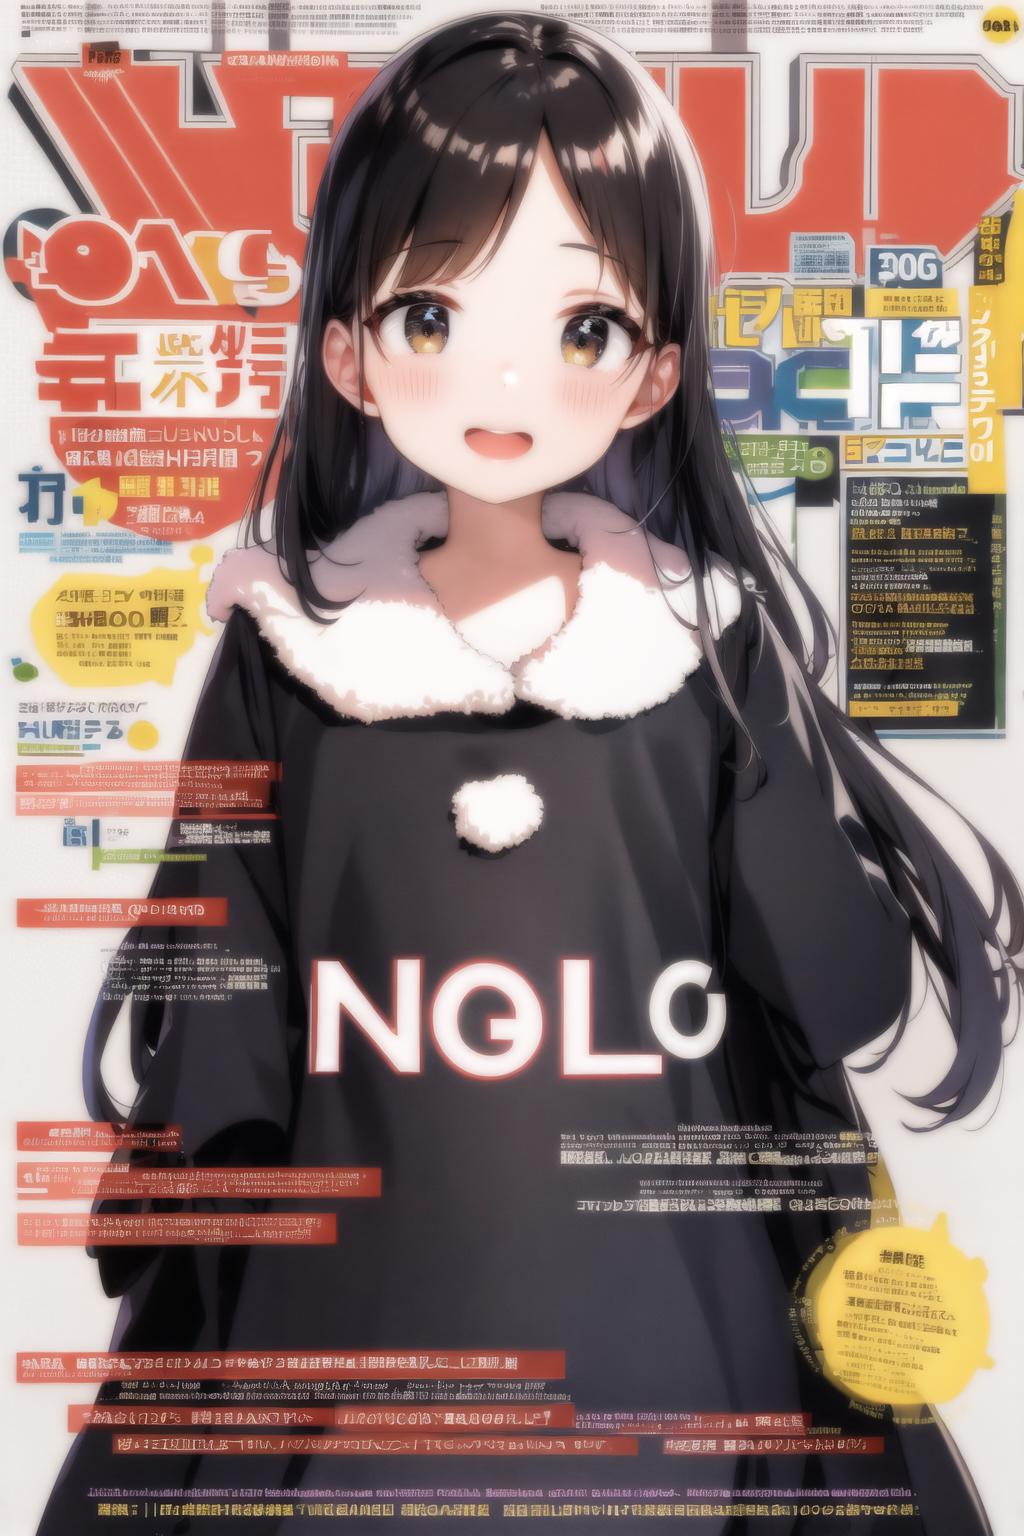 The Evolution of Manga Magazines - Immortallium's Blog